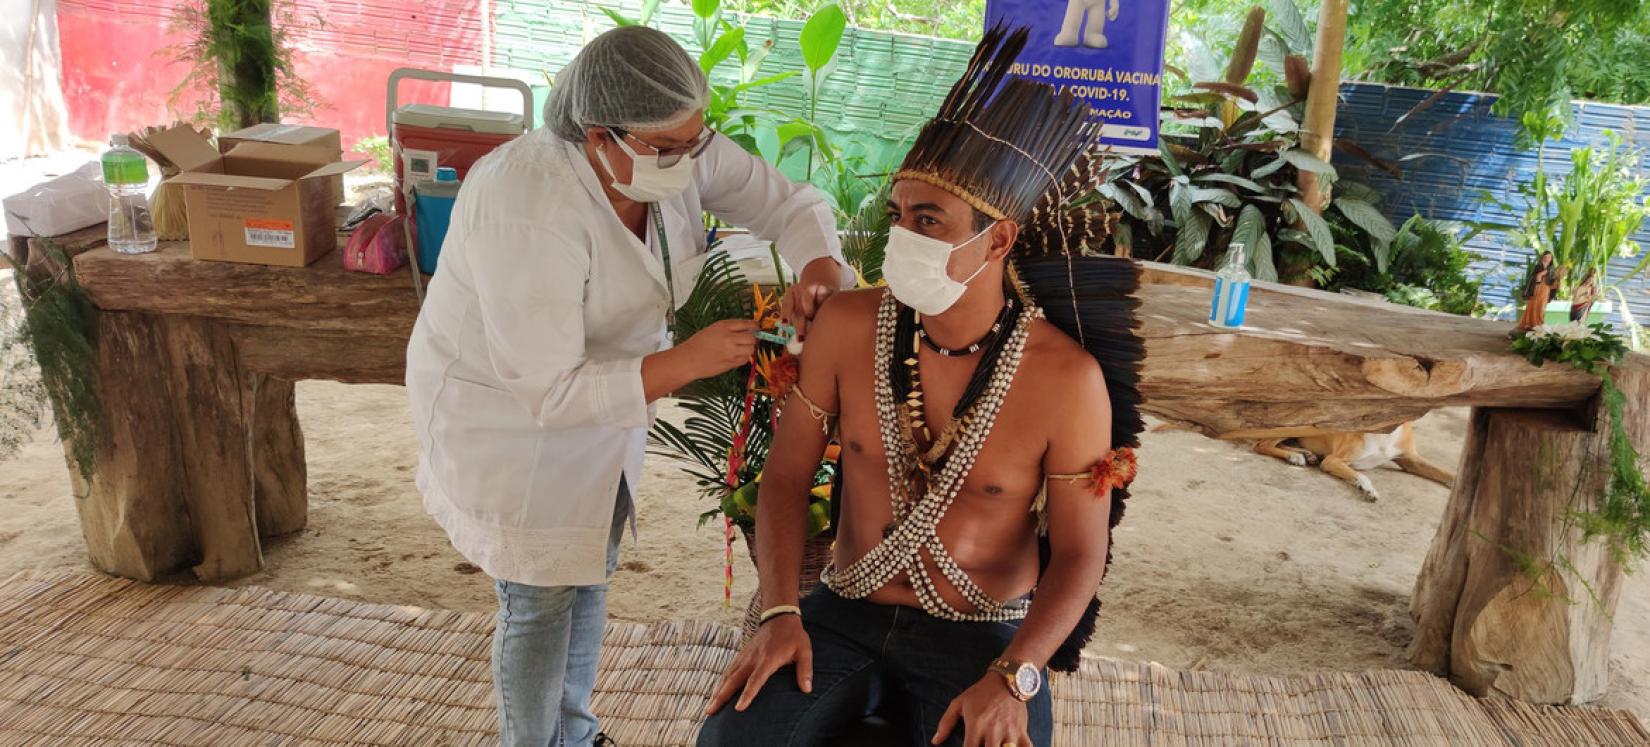 Indígena recebe a vacina contra a COVID-19 no Brasil